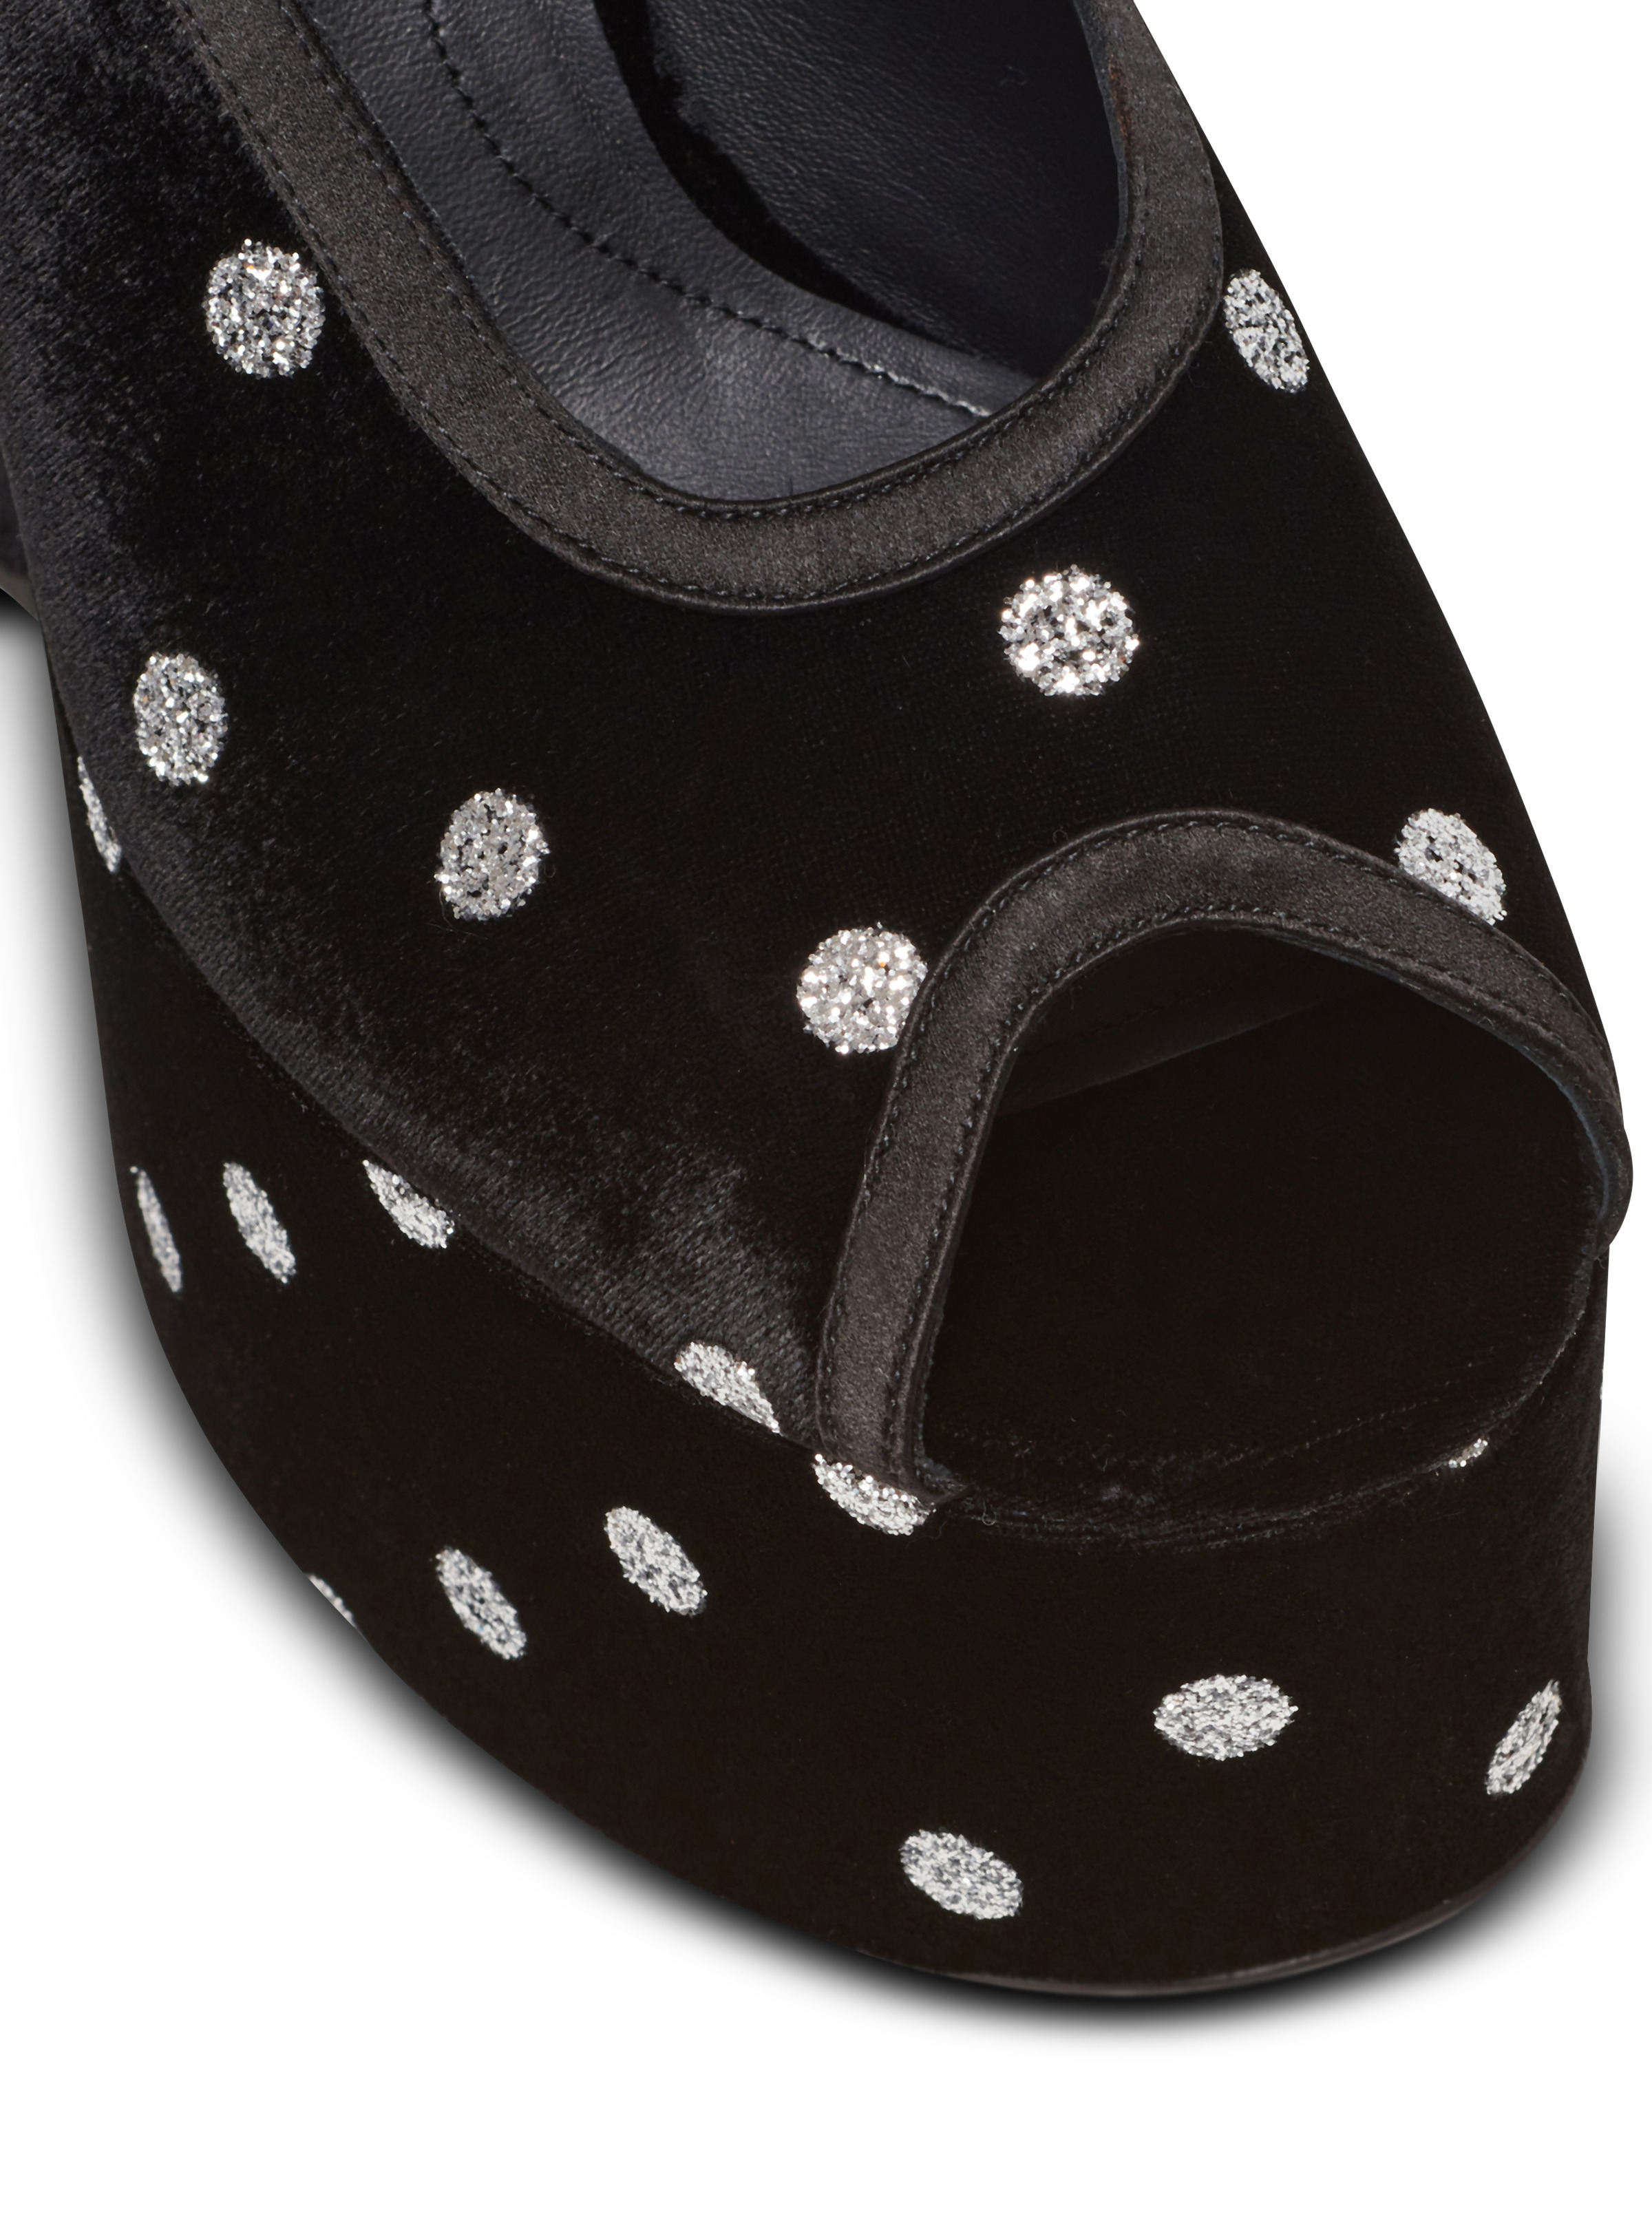 Cam sandals in velvet with polka dots - 5